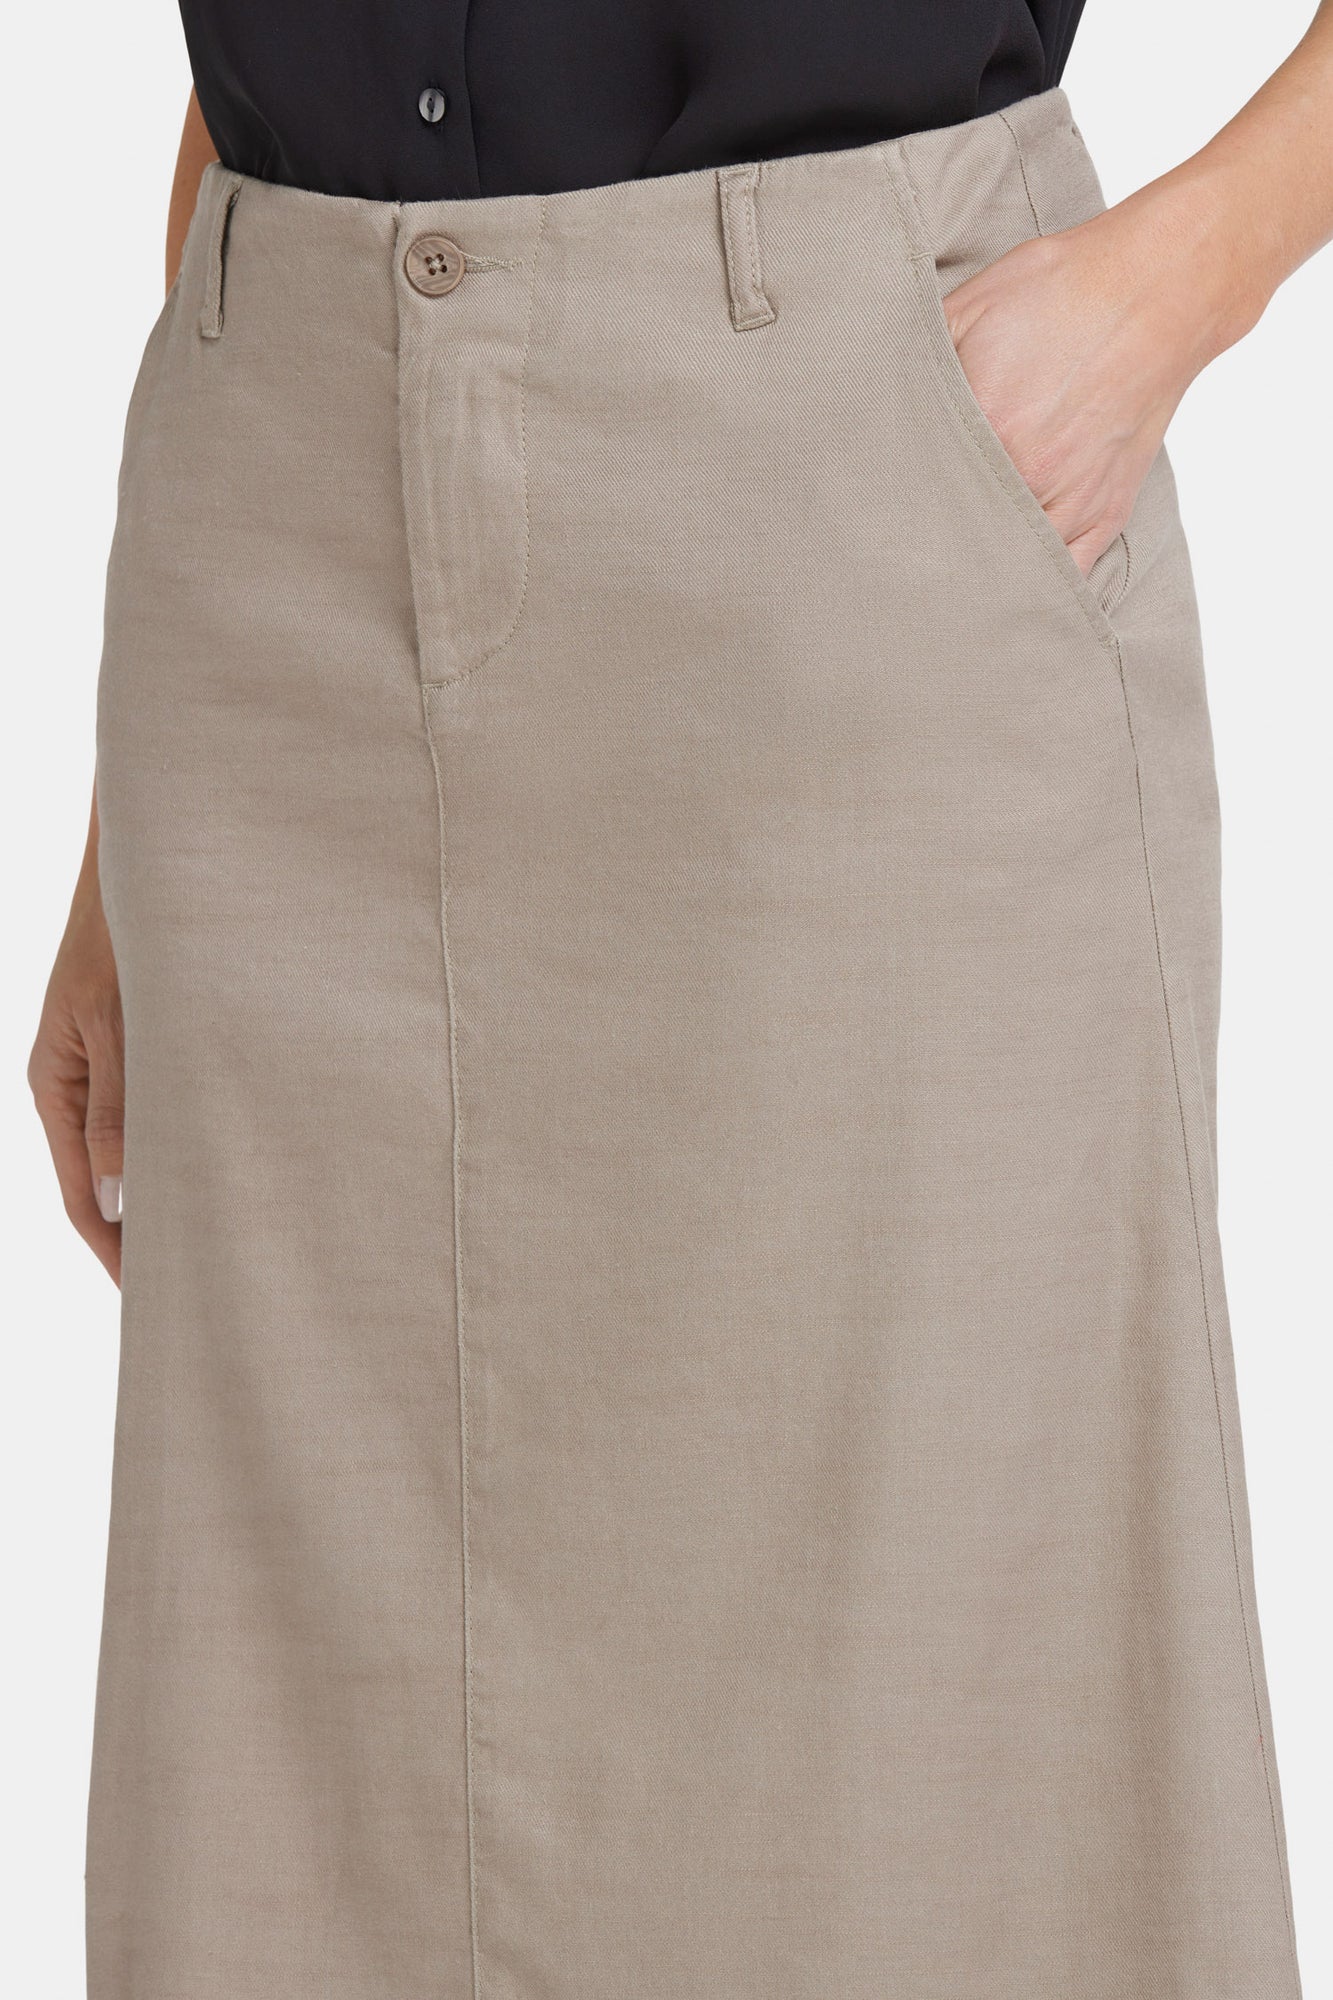 NYDJ Marilyn A-Line Skirt In Stretch Linen - Saddlewood